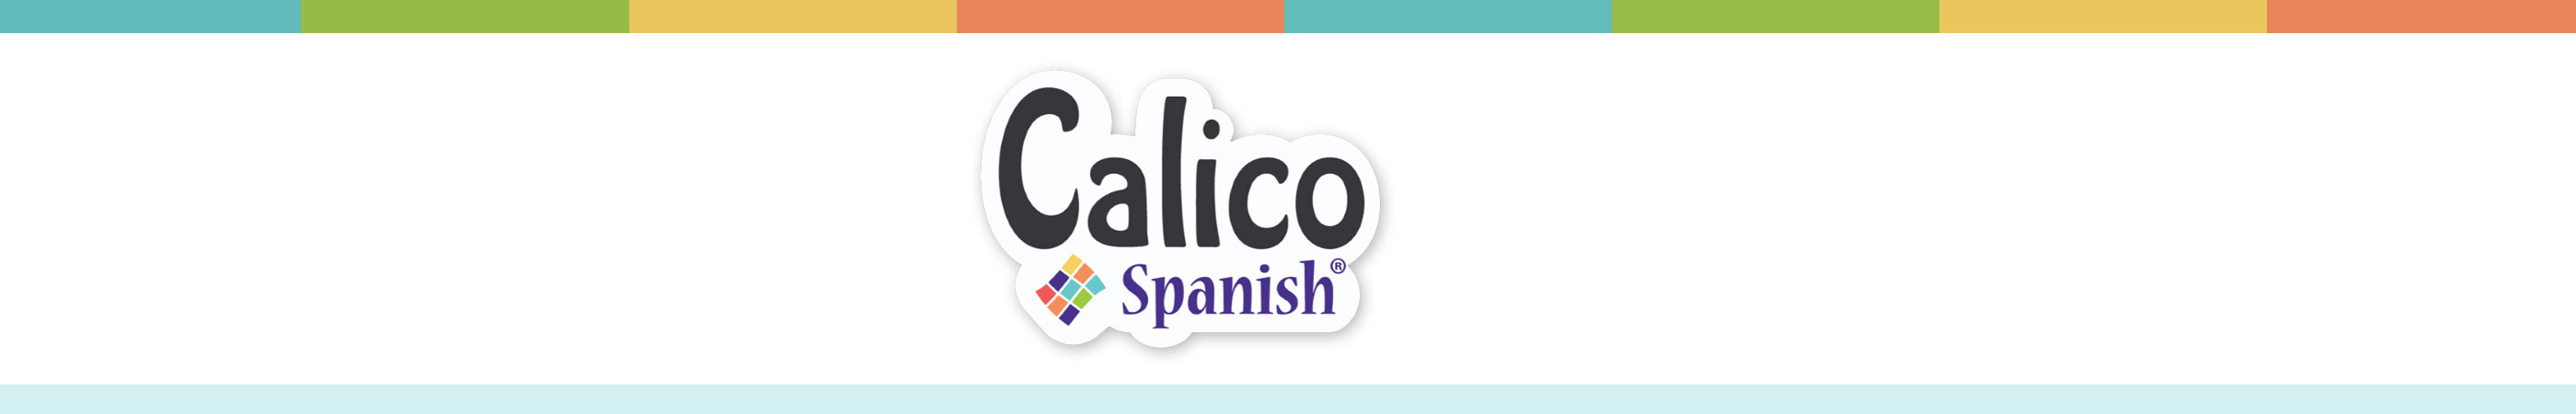 Calico Spanish banner